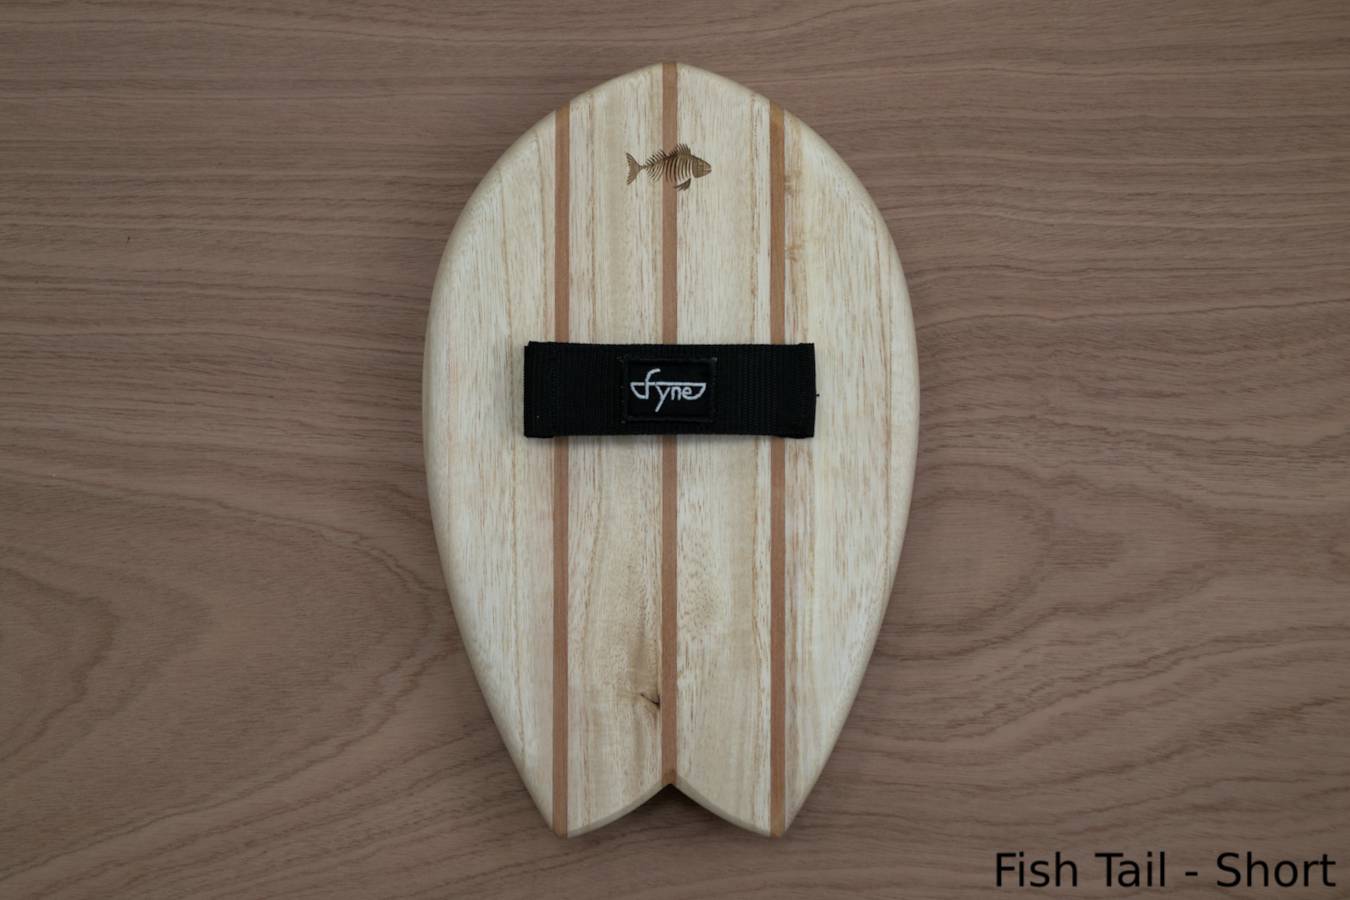 Fish Tail (short) wooden handplane handmade by Fyne Boat Kits